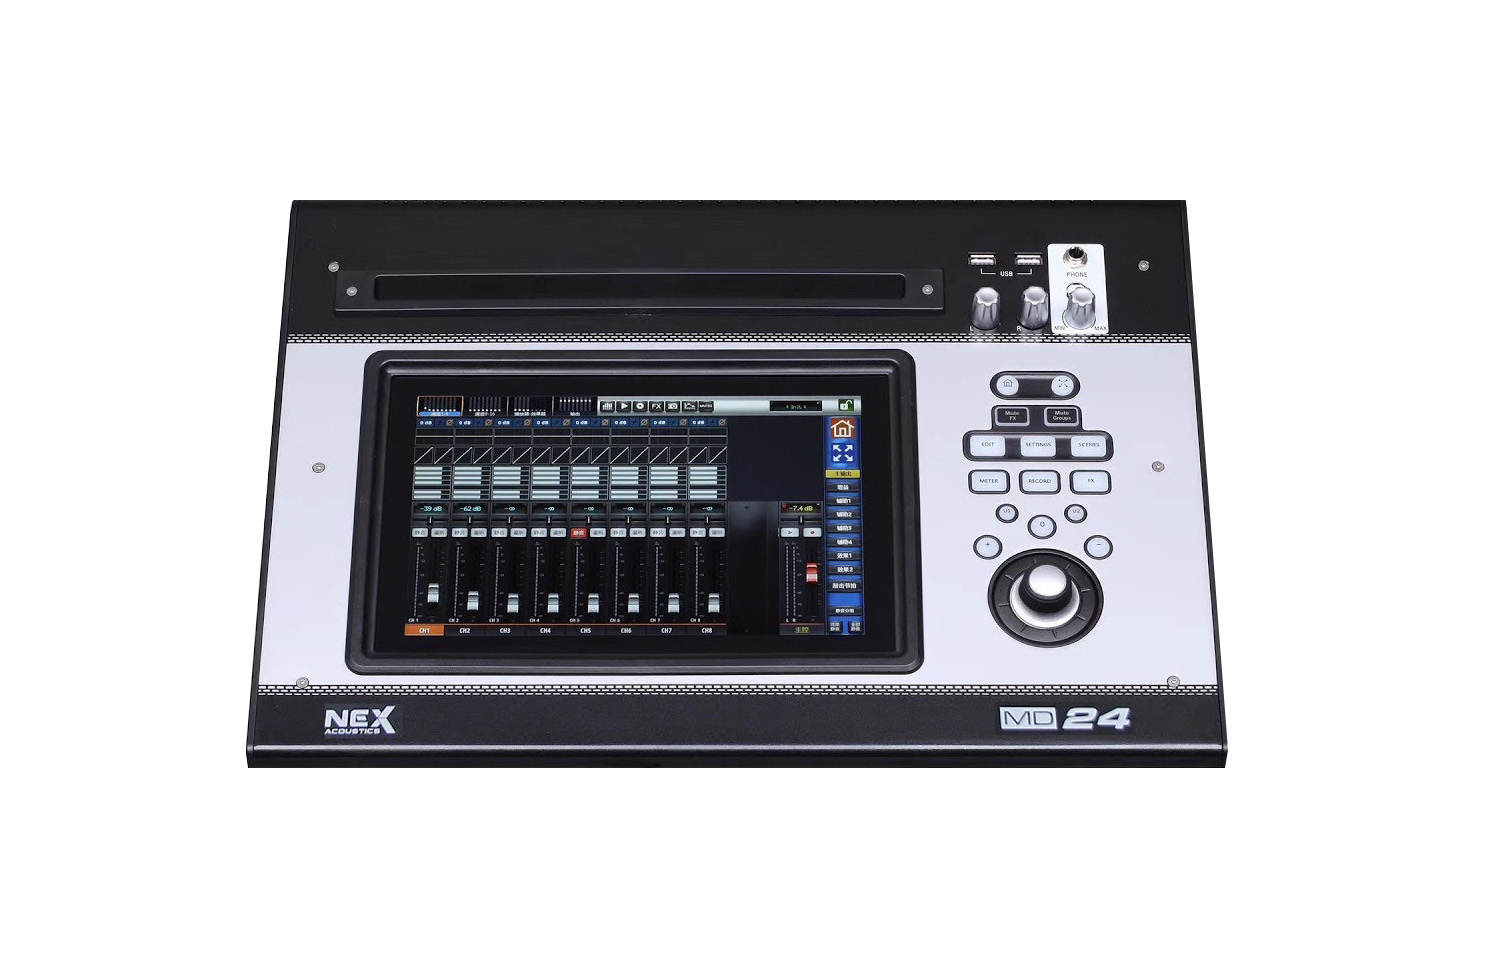 Mixer Digital NEX MD24 - Touch screen 10 inch